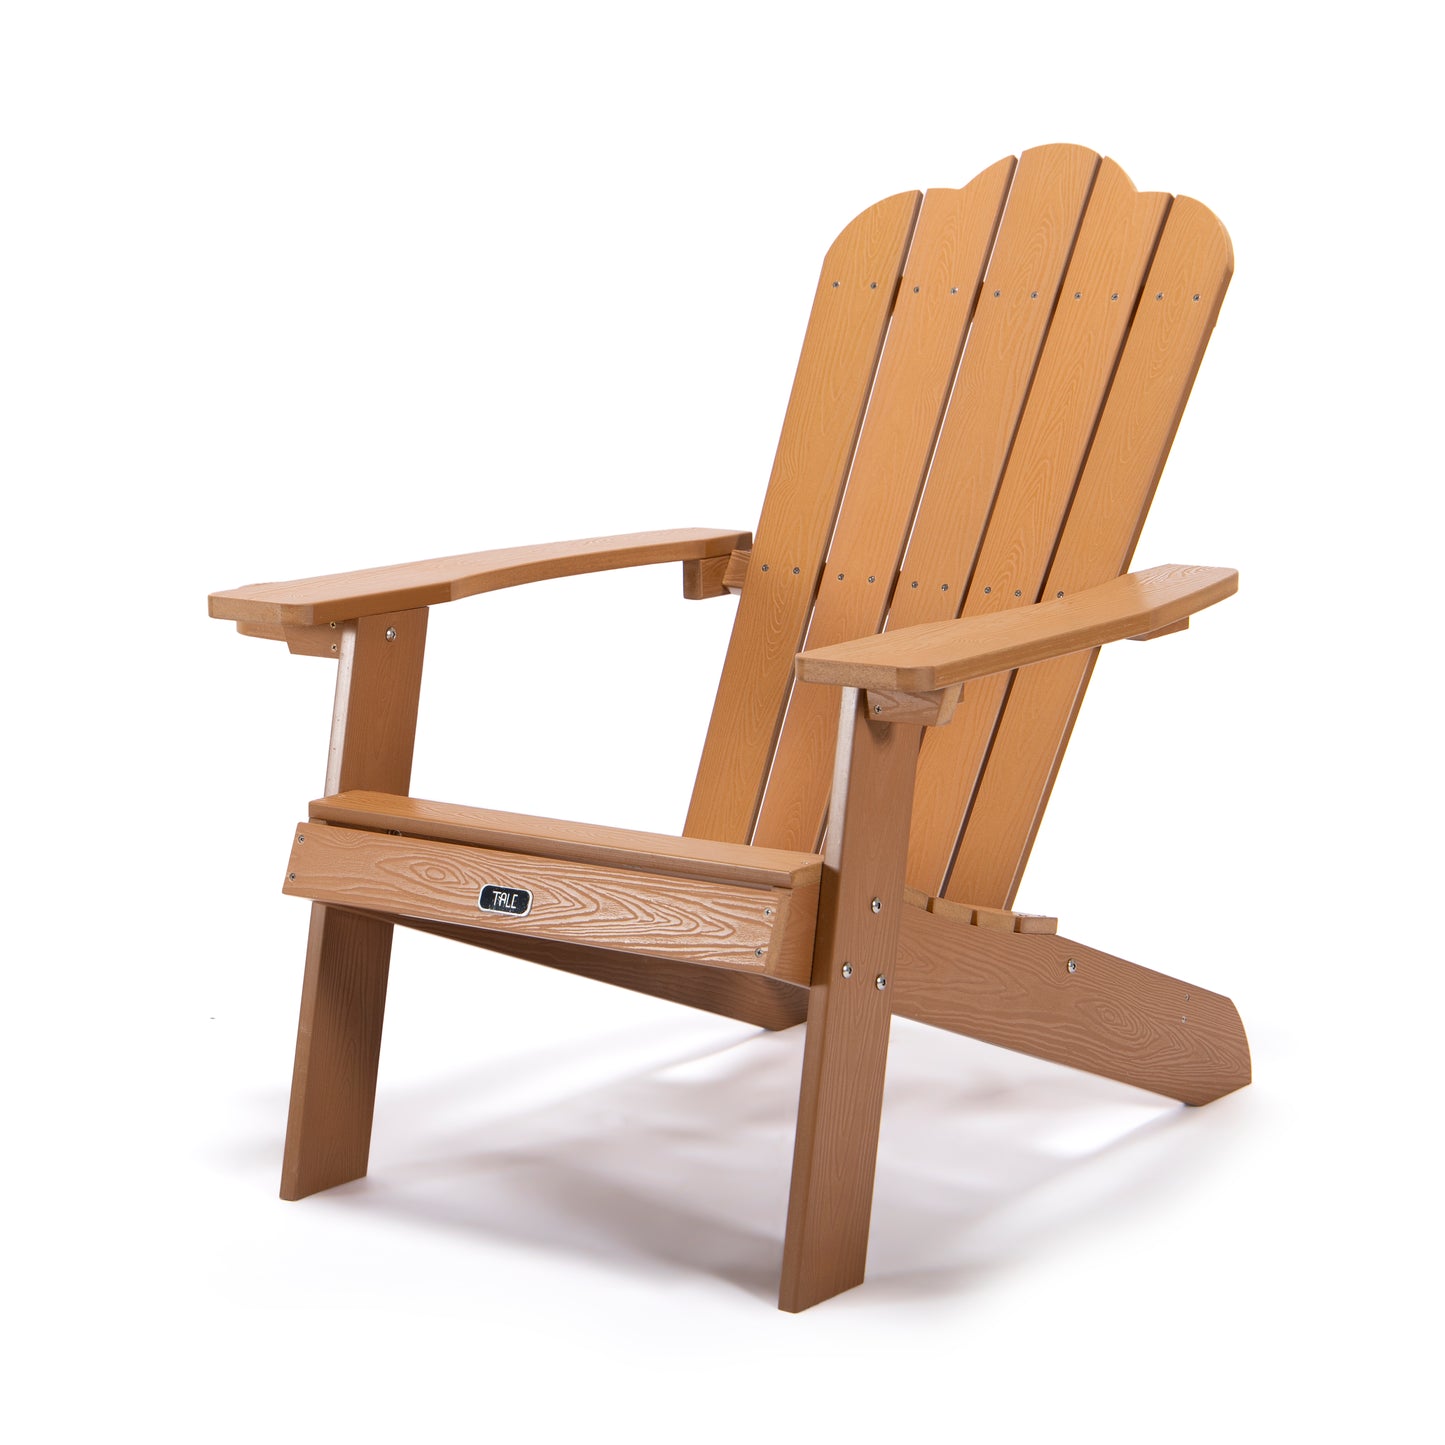 TALE Adirondack Chair